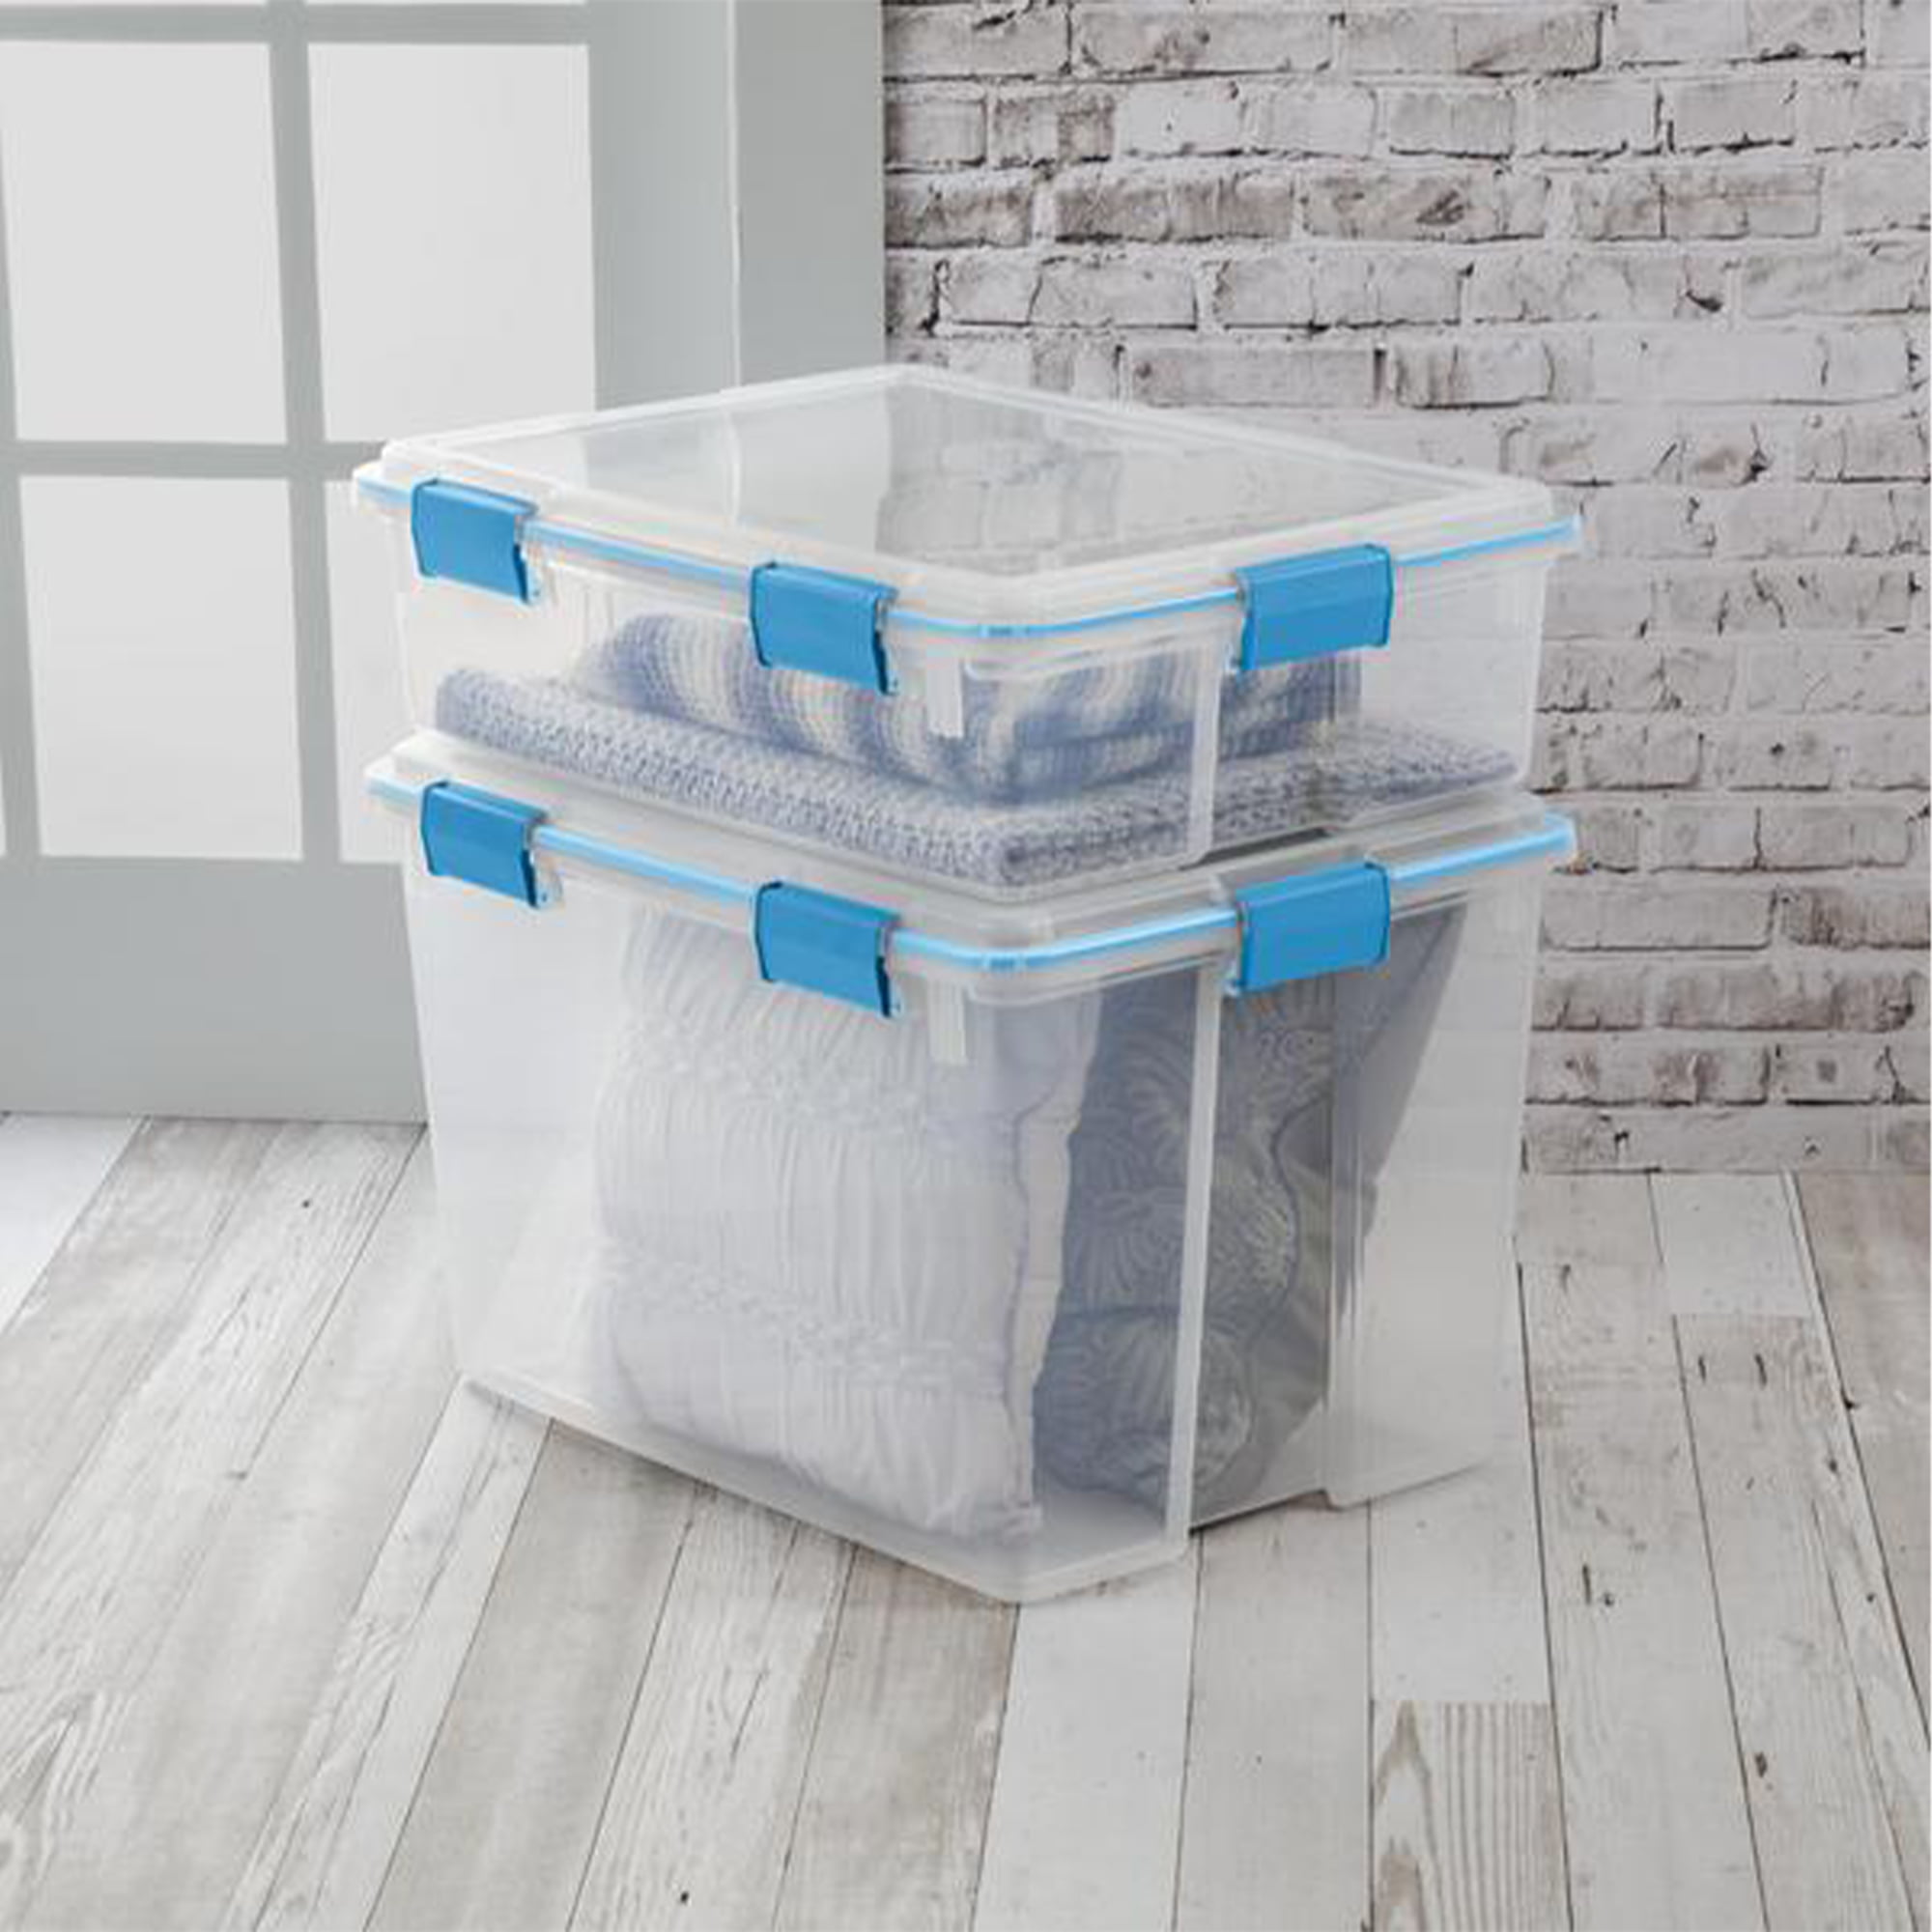 Sterilite STERILITE 37 Qt Thin Gasket Box Clear Storage Bin Containers,  12-Pack